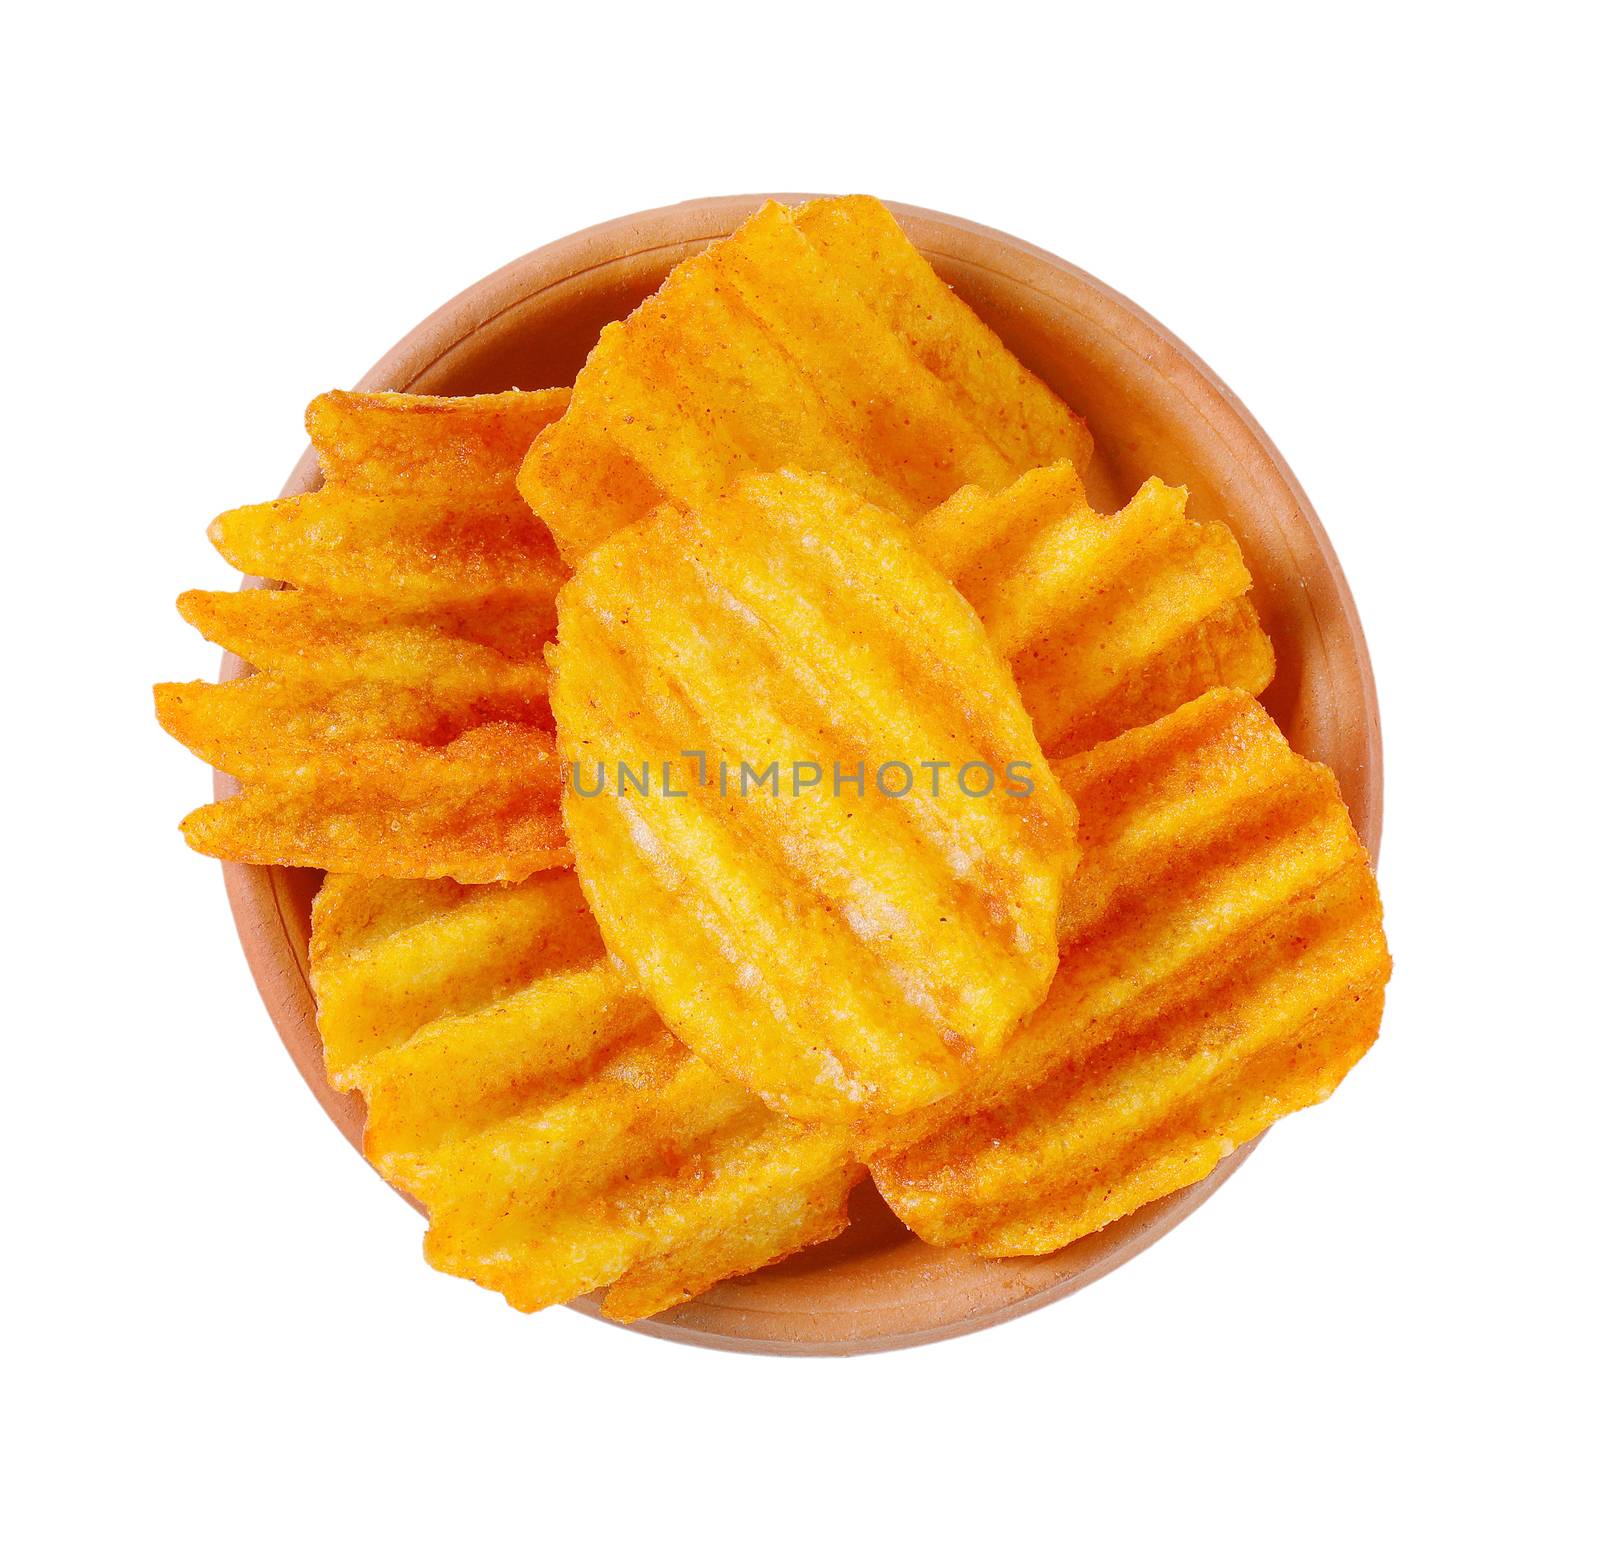 fried potato chips by Digifoodstock